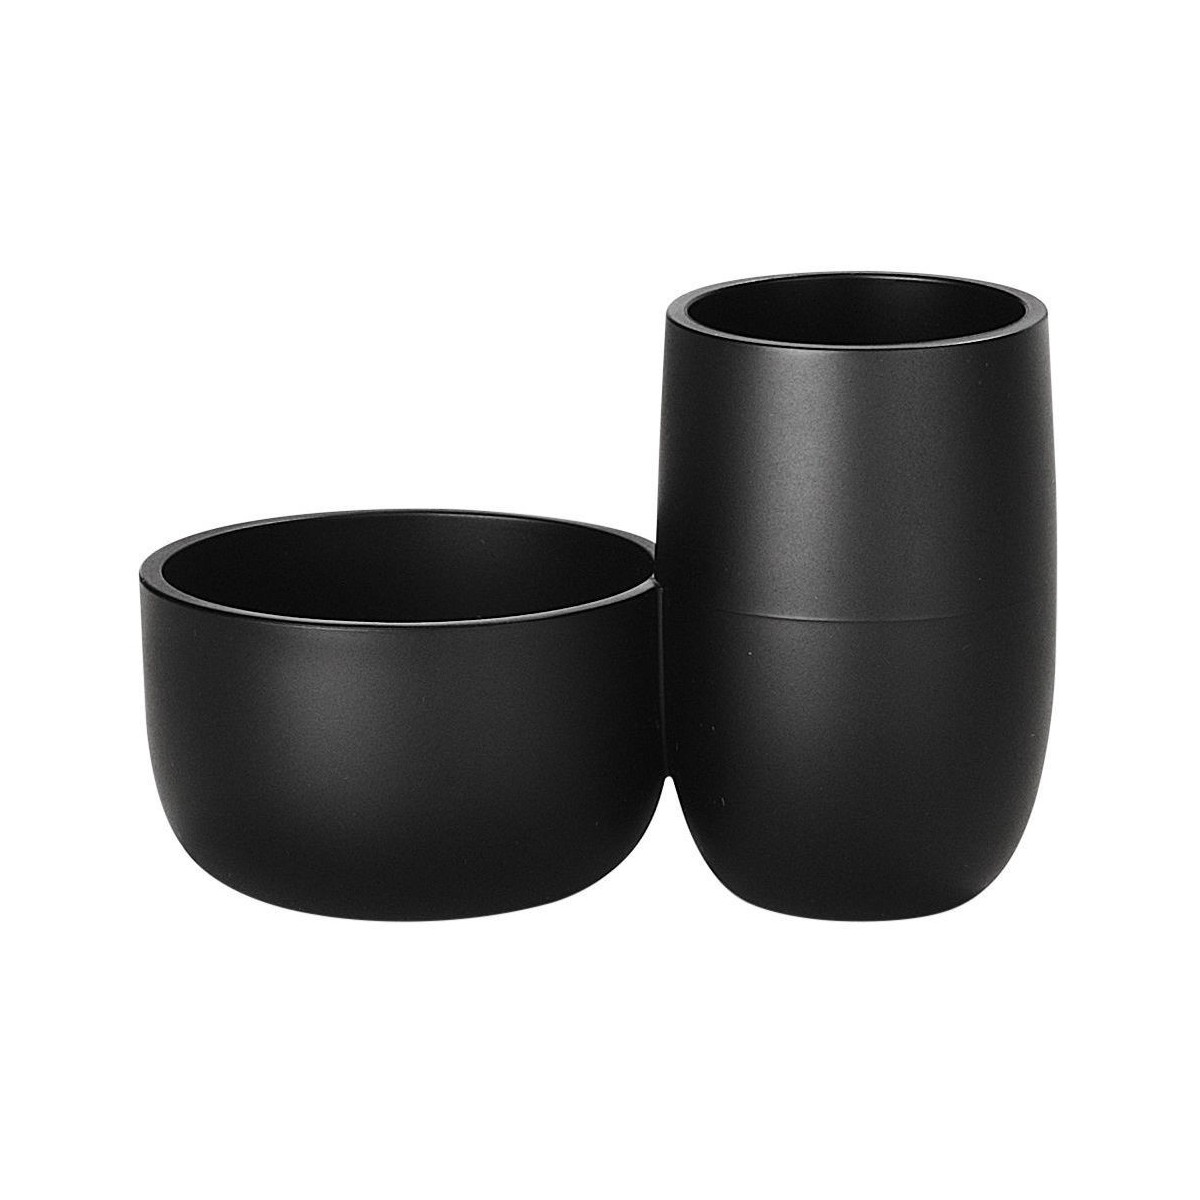 black - key bowls - Gaku accessories